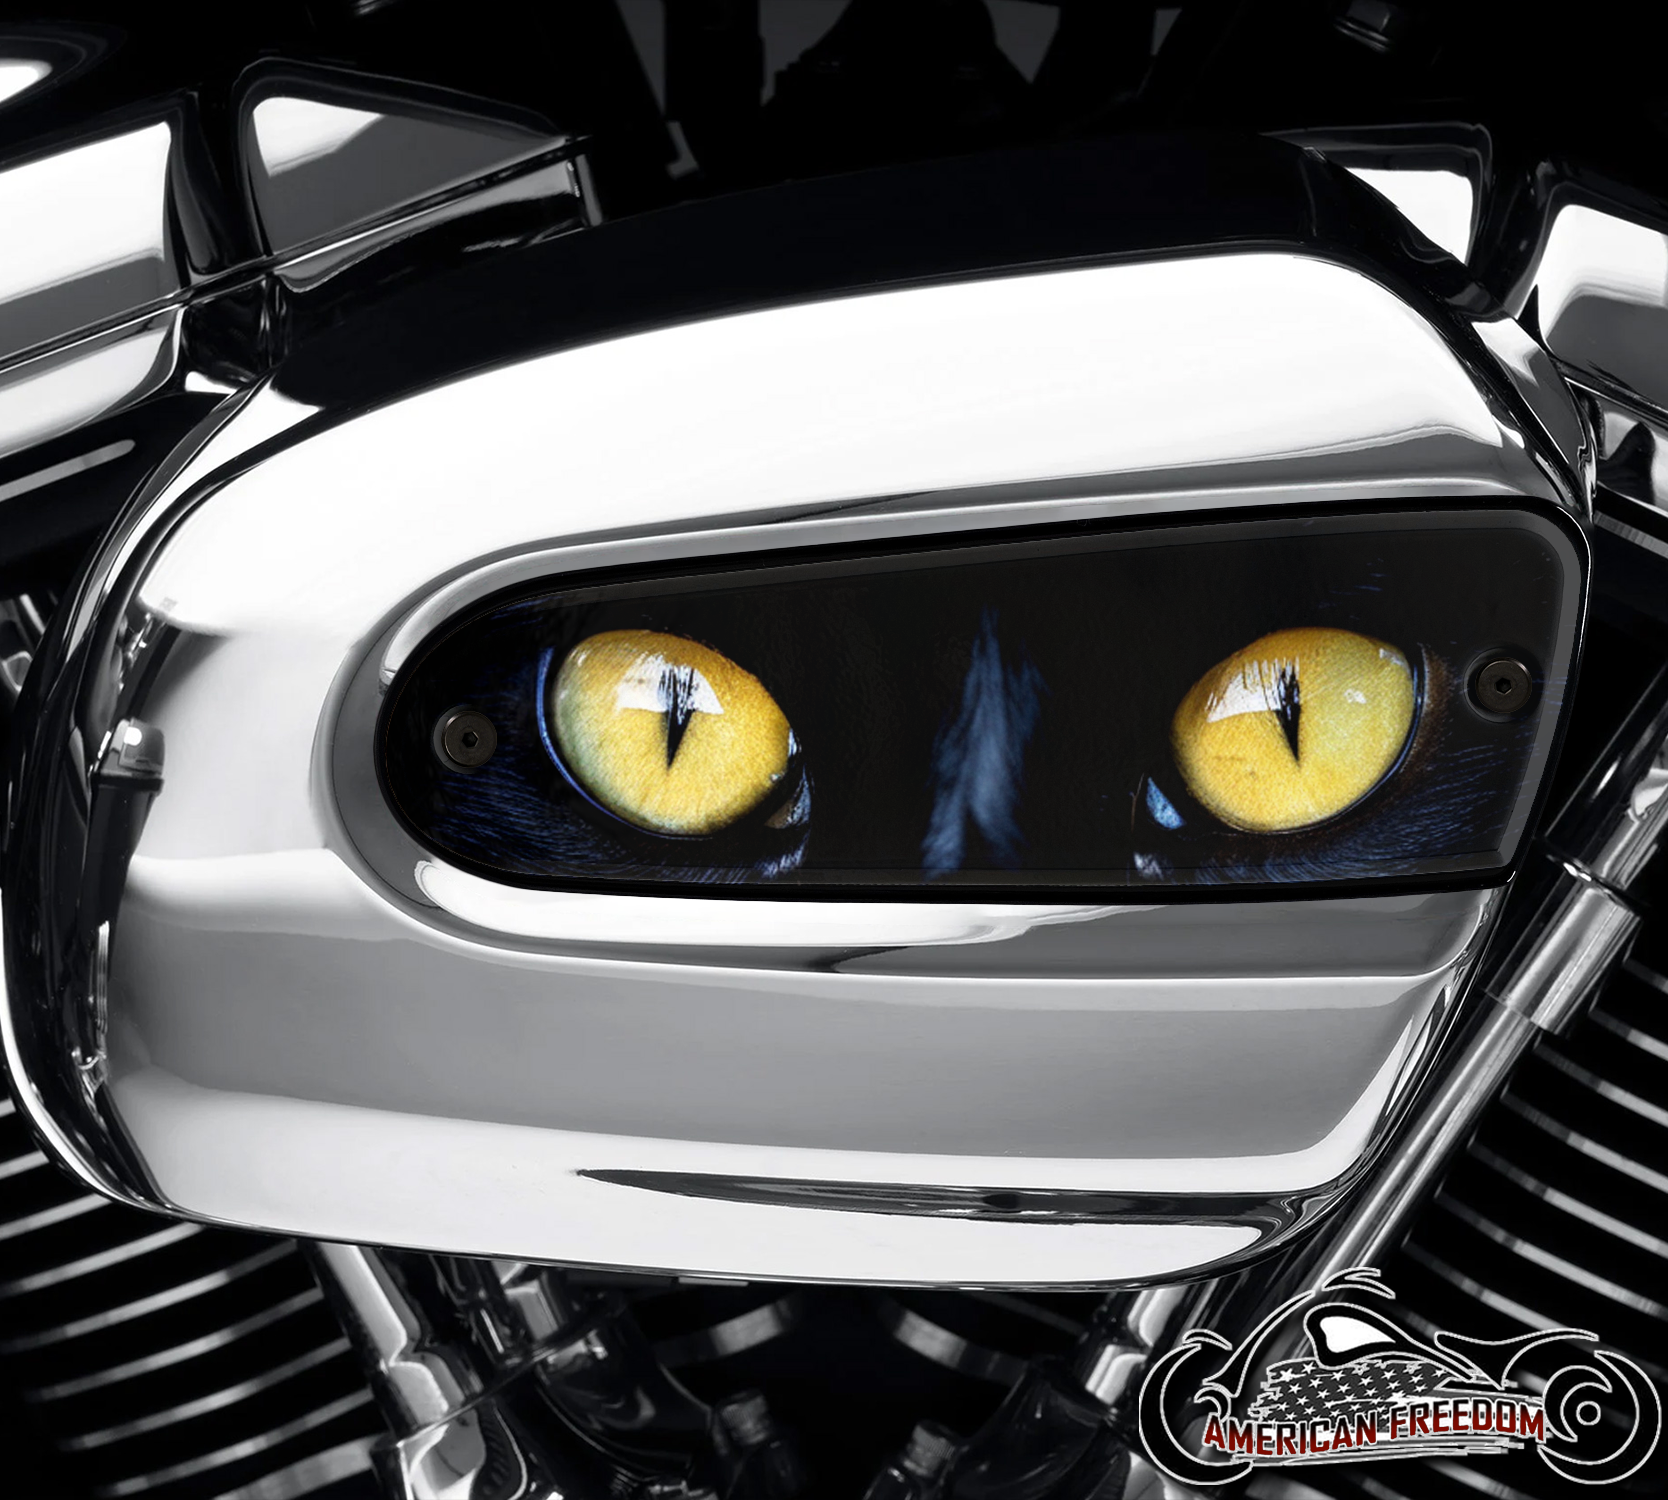 Harley Davidson Wedge Air Cleaner Insert - Cat Eyes